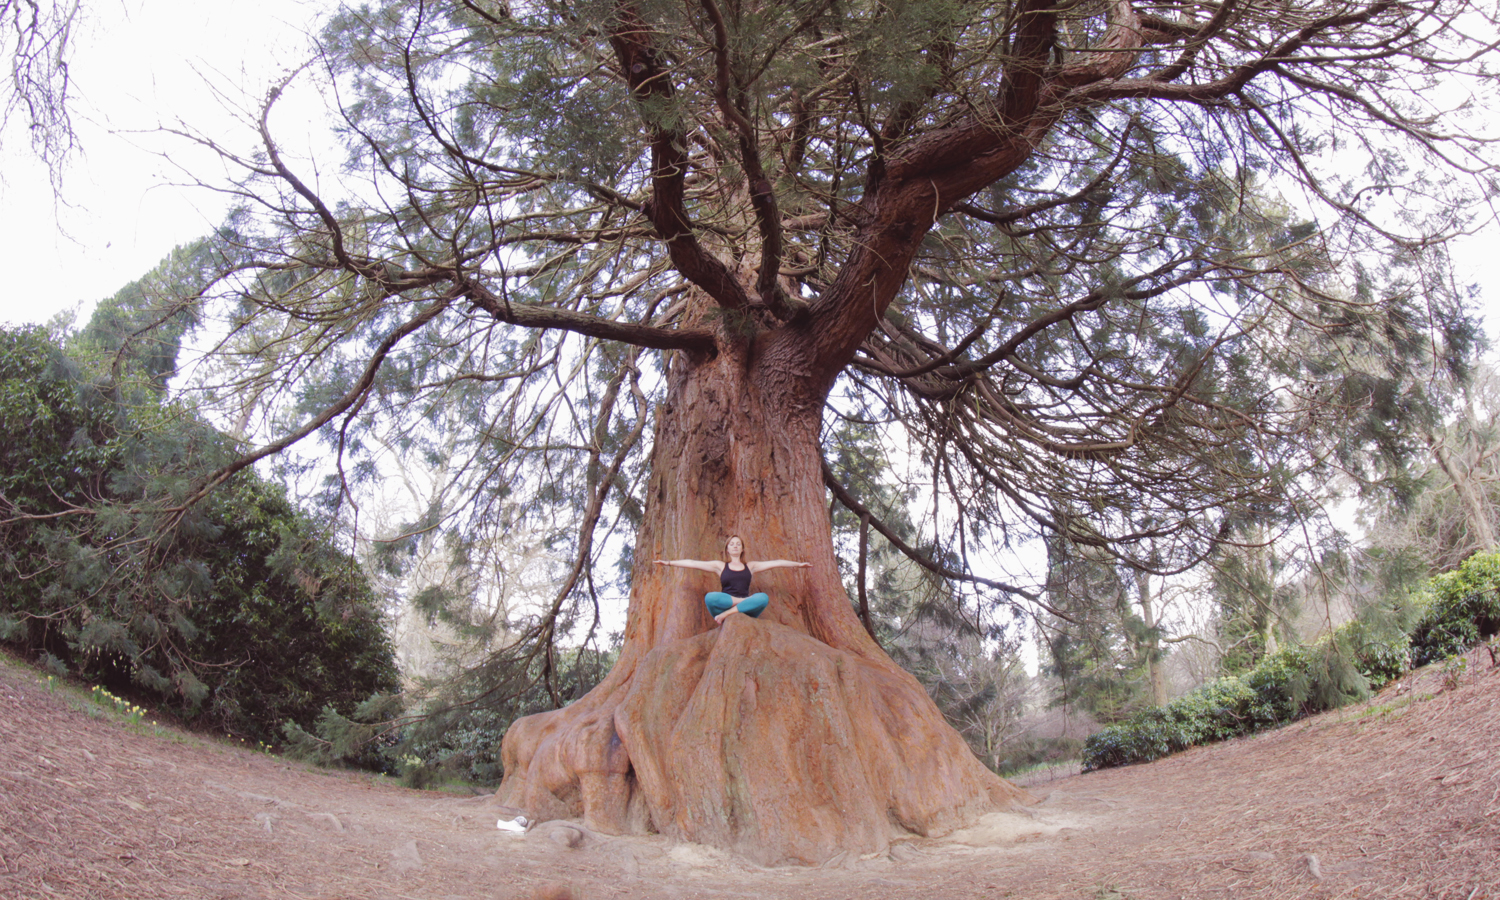 dvdv - on a tree - yoga pose